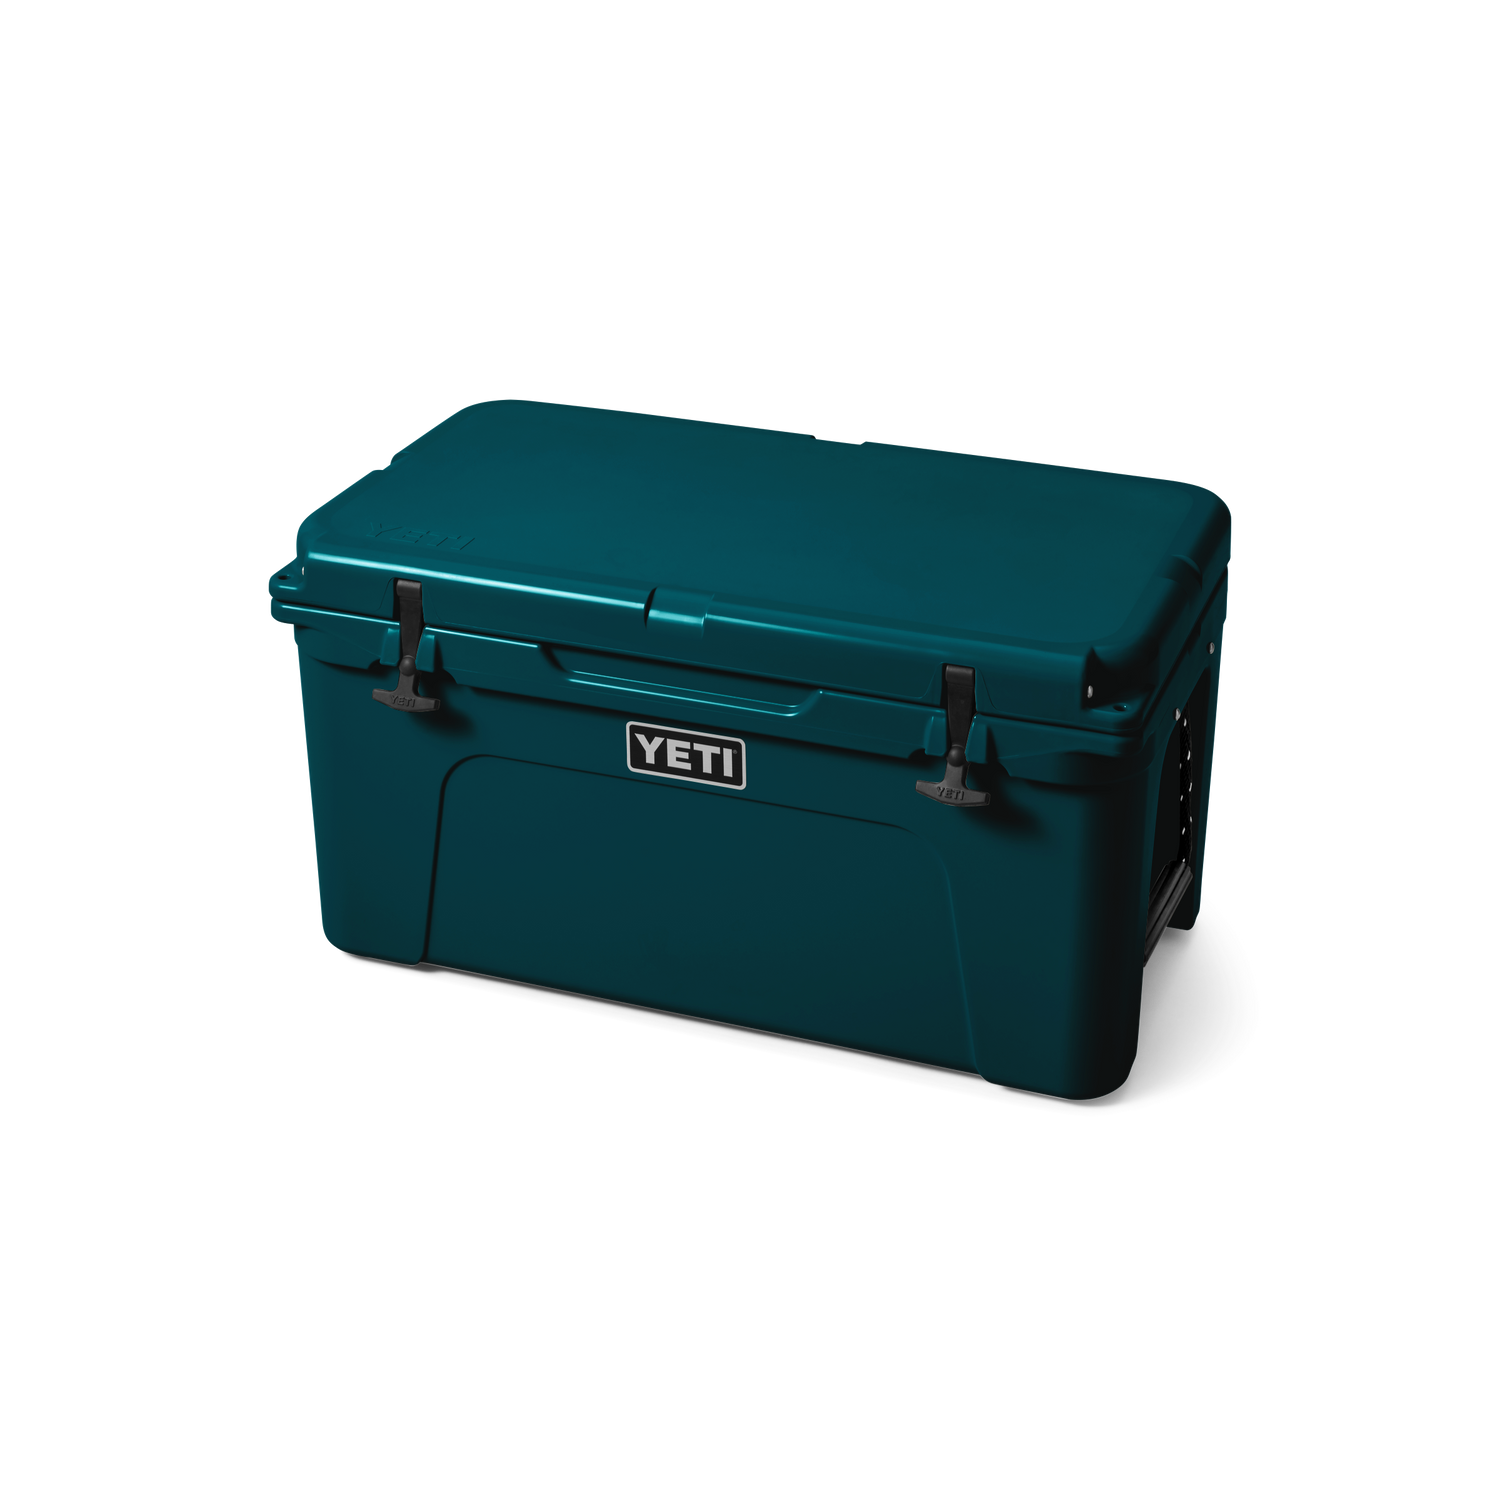 YETI Tundra® 65 Cool Box Agave Teal